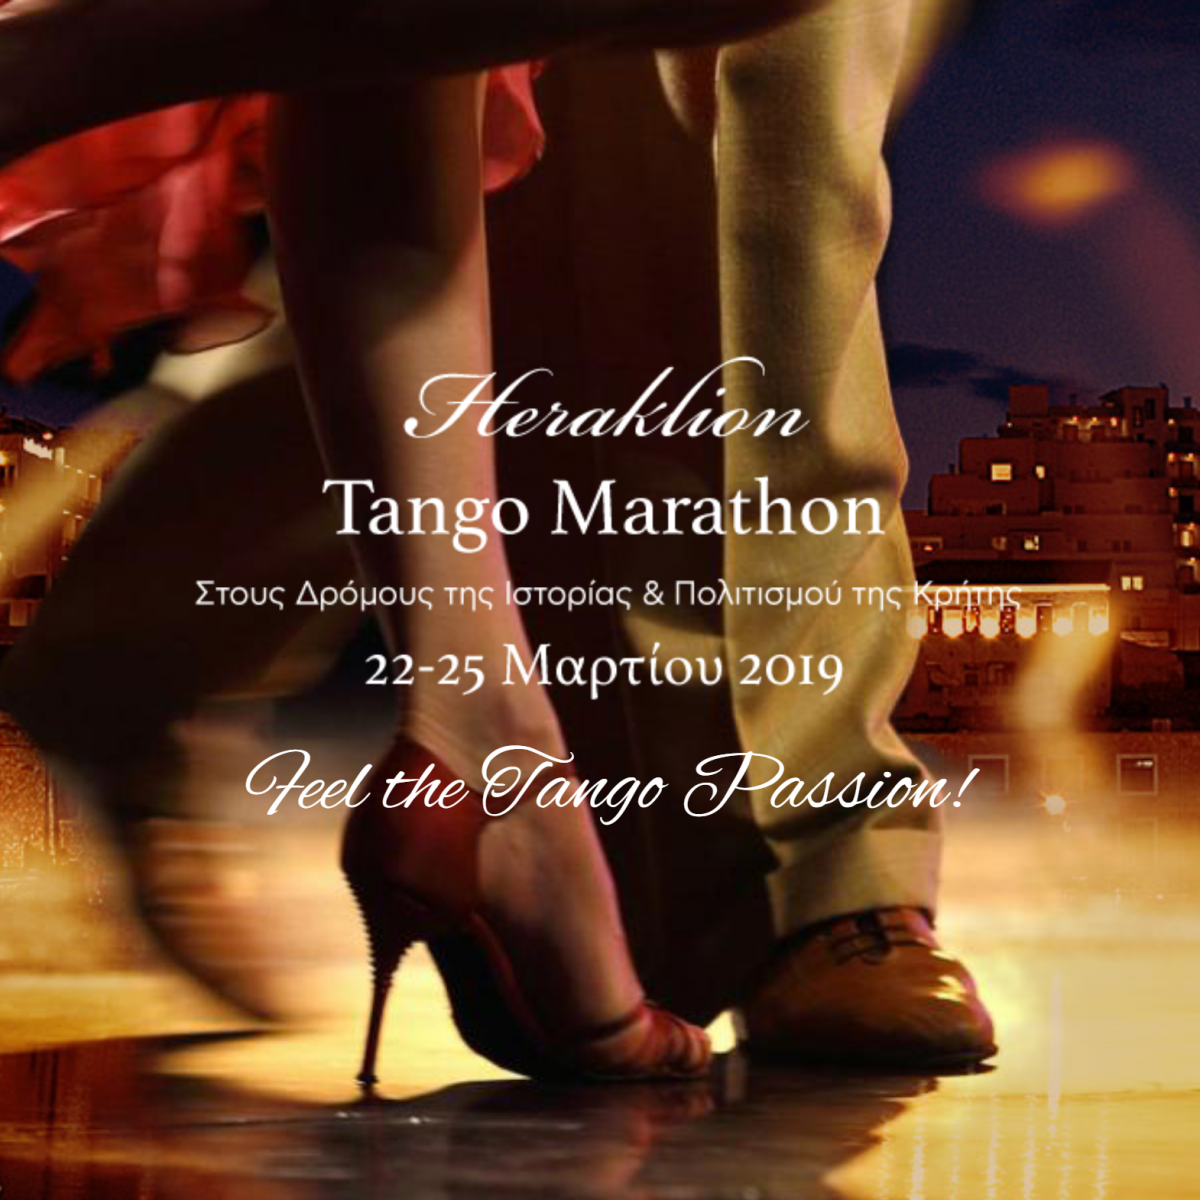 Heraklion Tango Marathon 22-25 Μαρτίου 2019